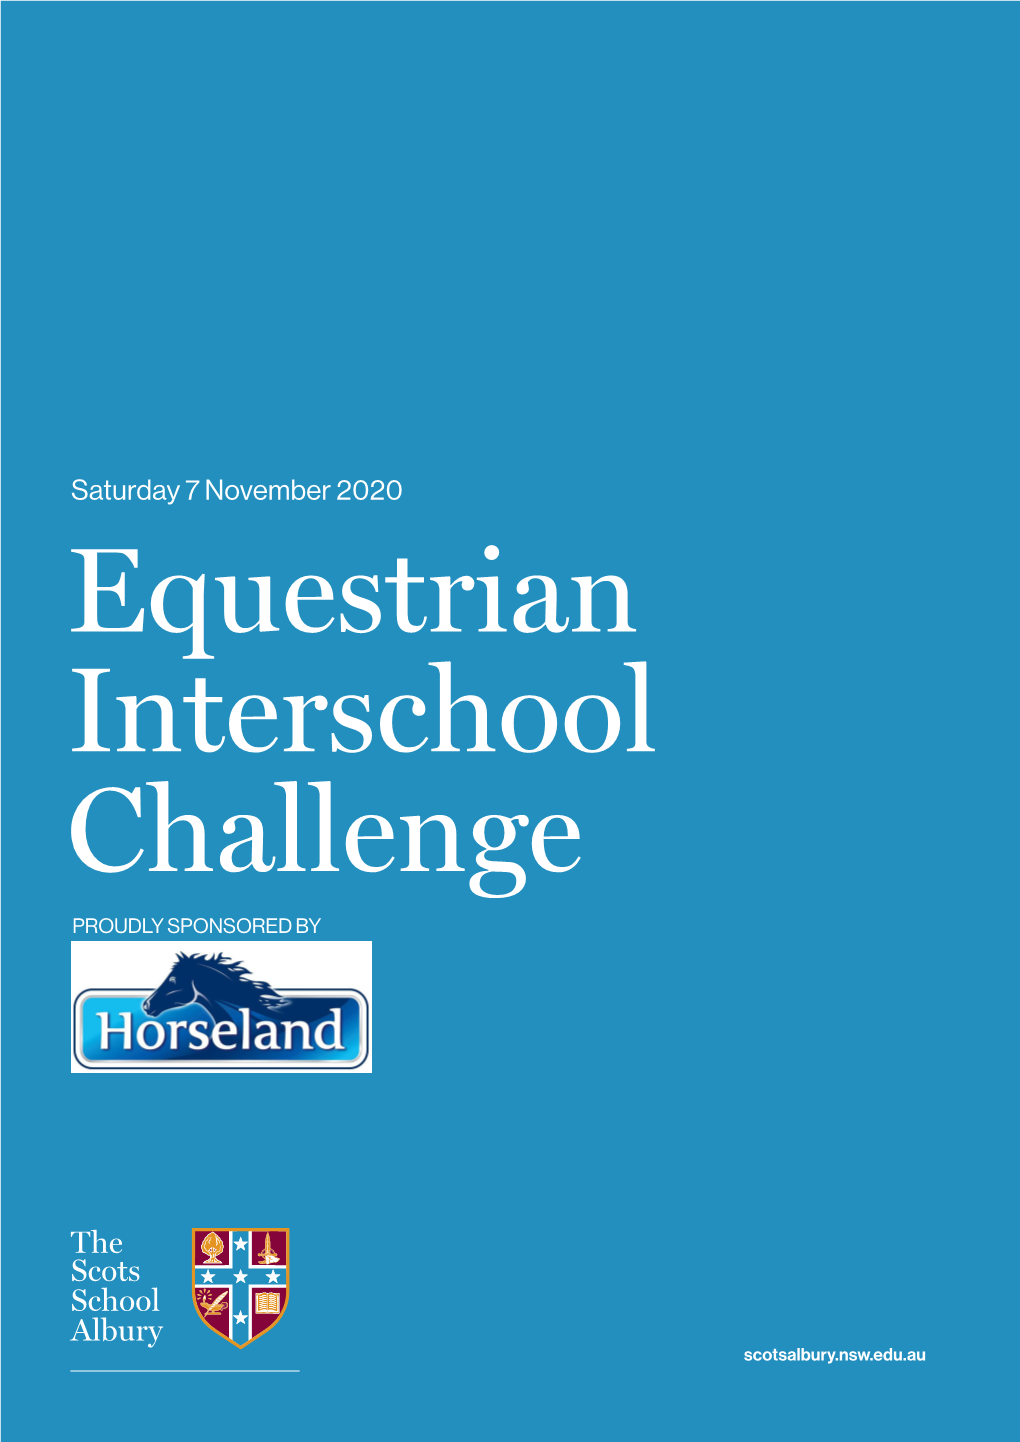 The Scots School Albury Scotsalbury.Nsw.Edu.Au Eventevent Title Title Here Here Monday Monday July July 21, 21, 2019 2019 Scots Equestrian Interschool Challenge 2020